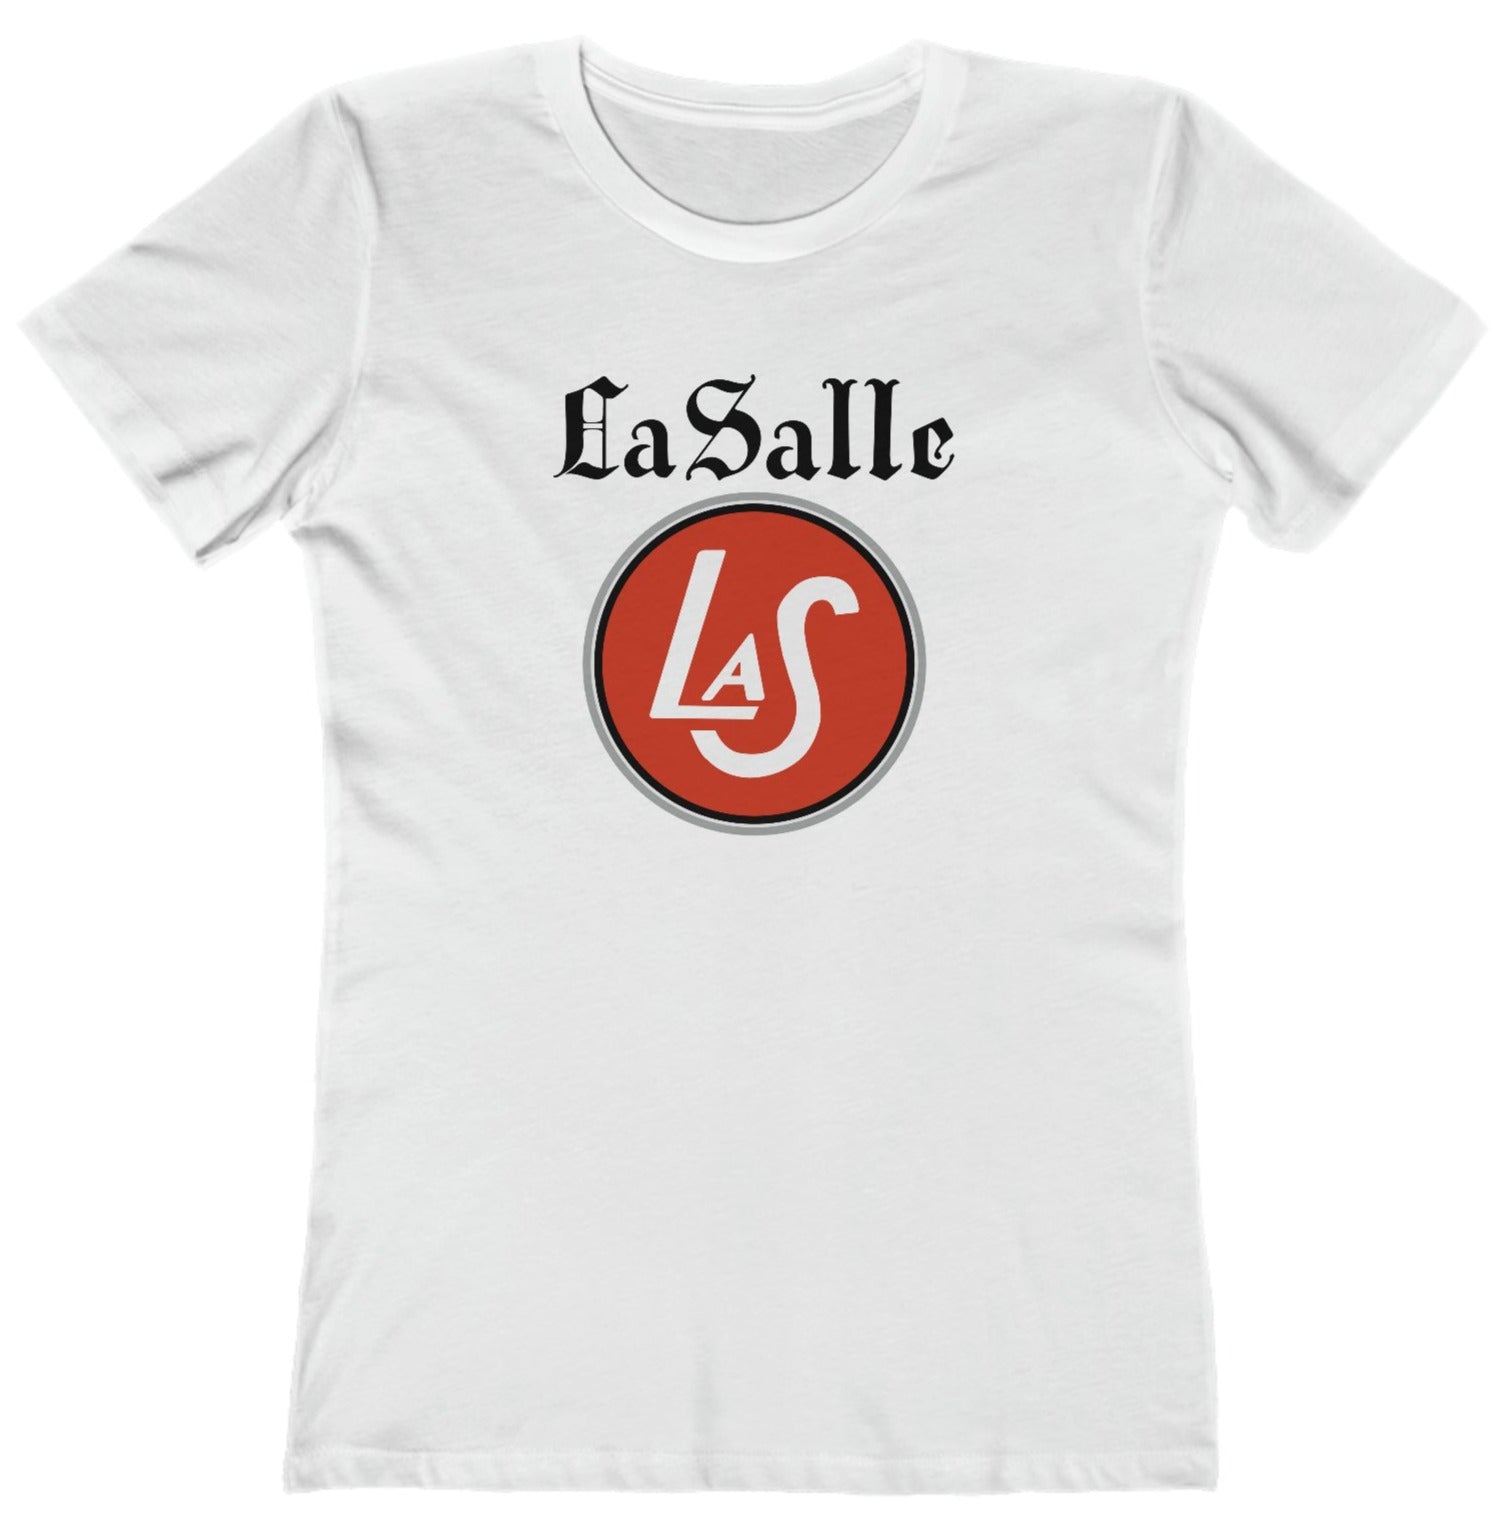 LaSalle Motors t shirt